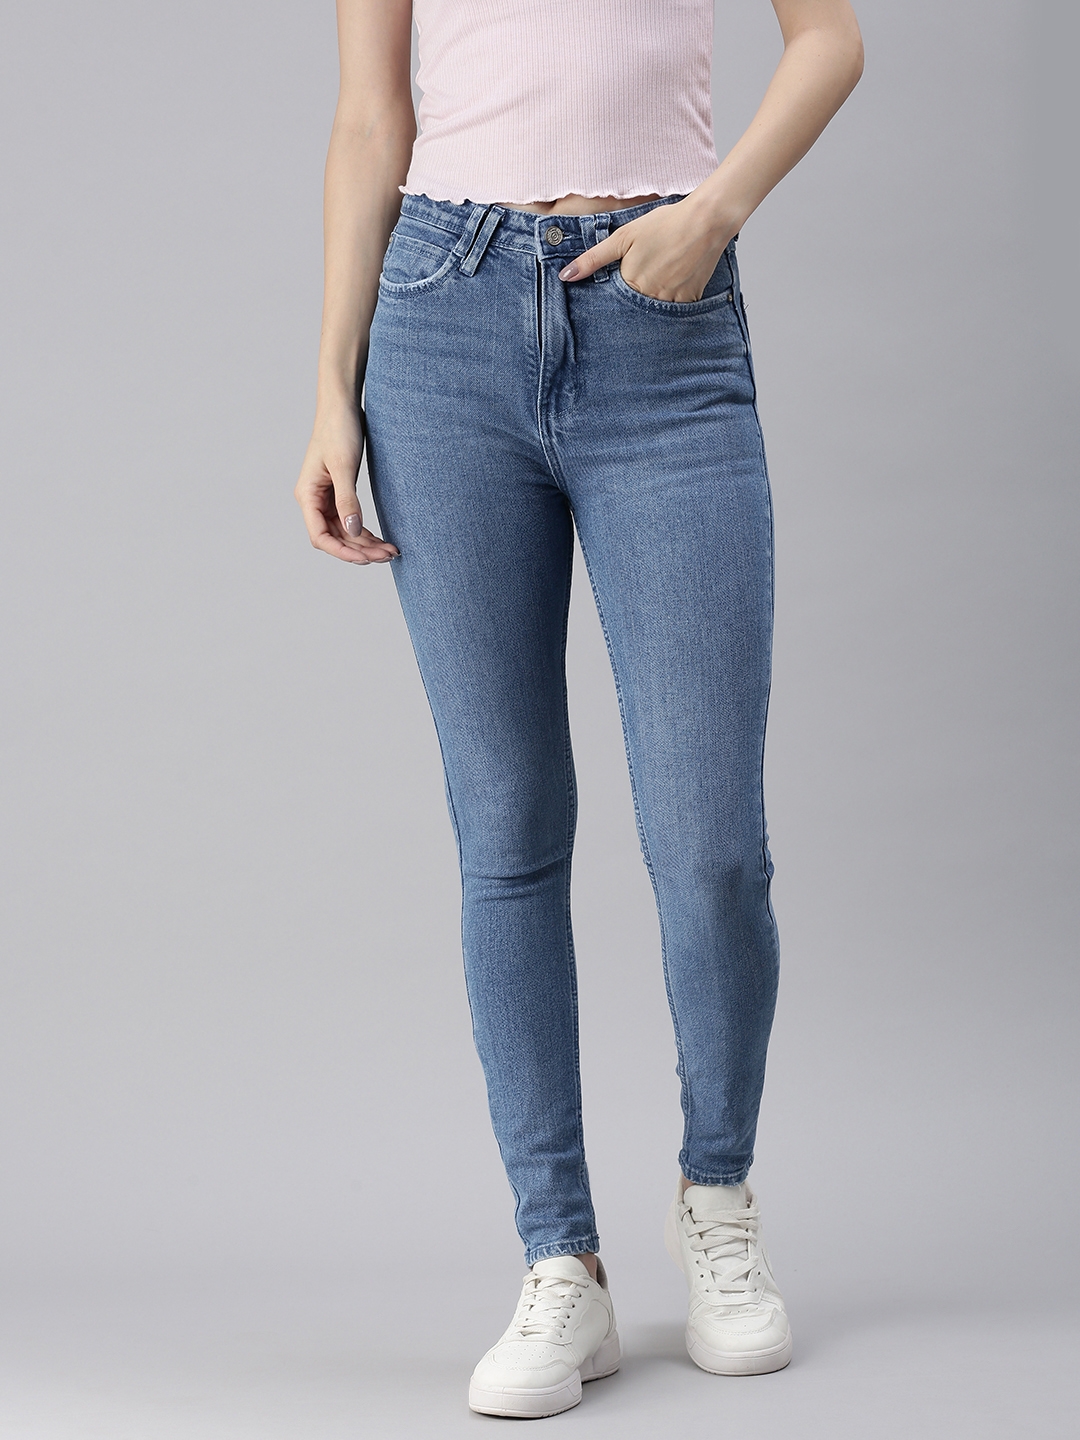 SHOWOFF Women's Clean Look Blue Slim Fit Denim Jeans